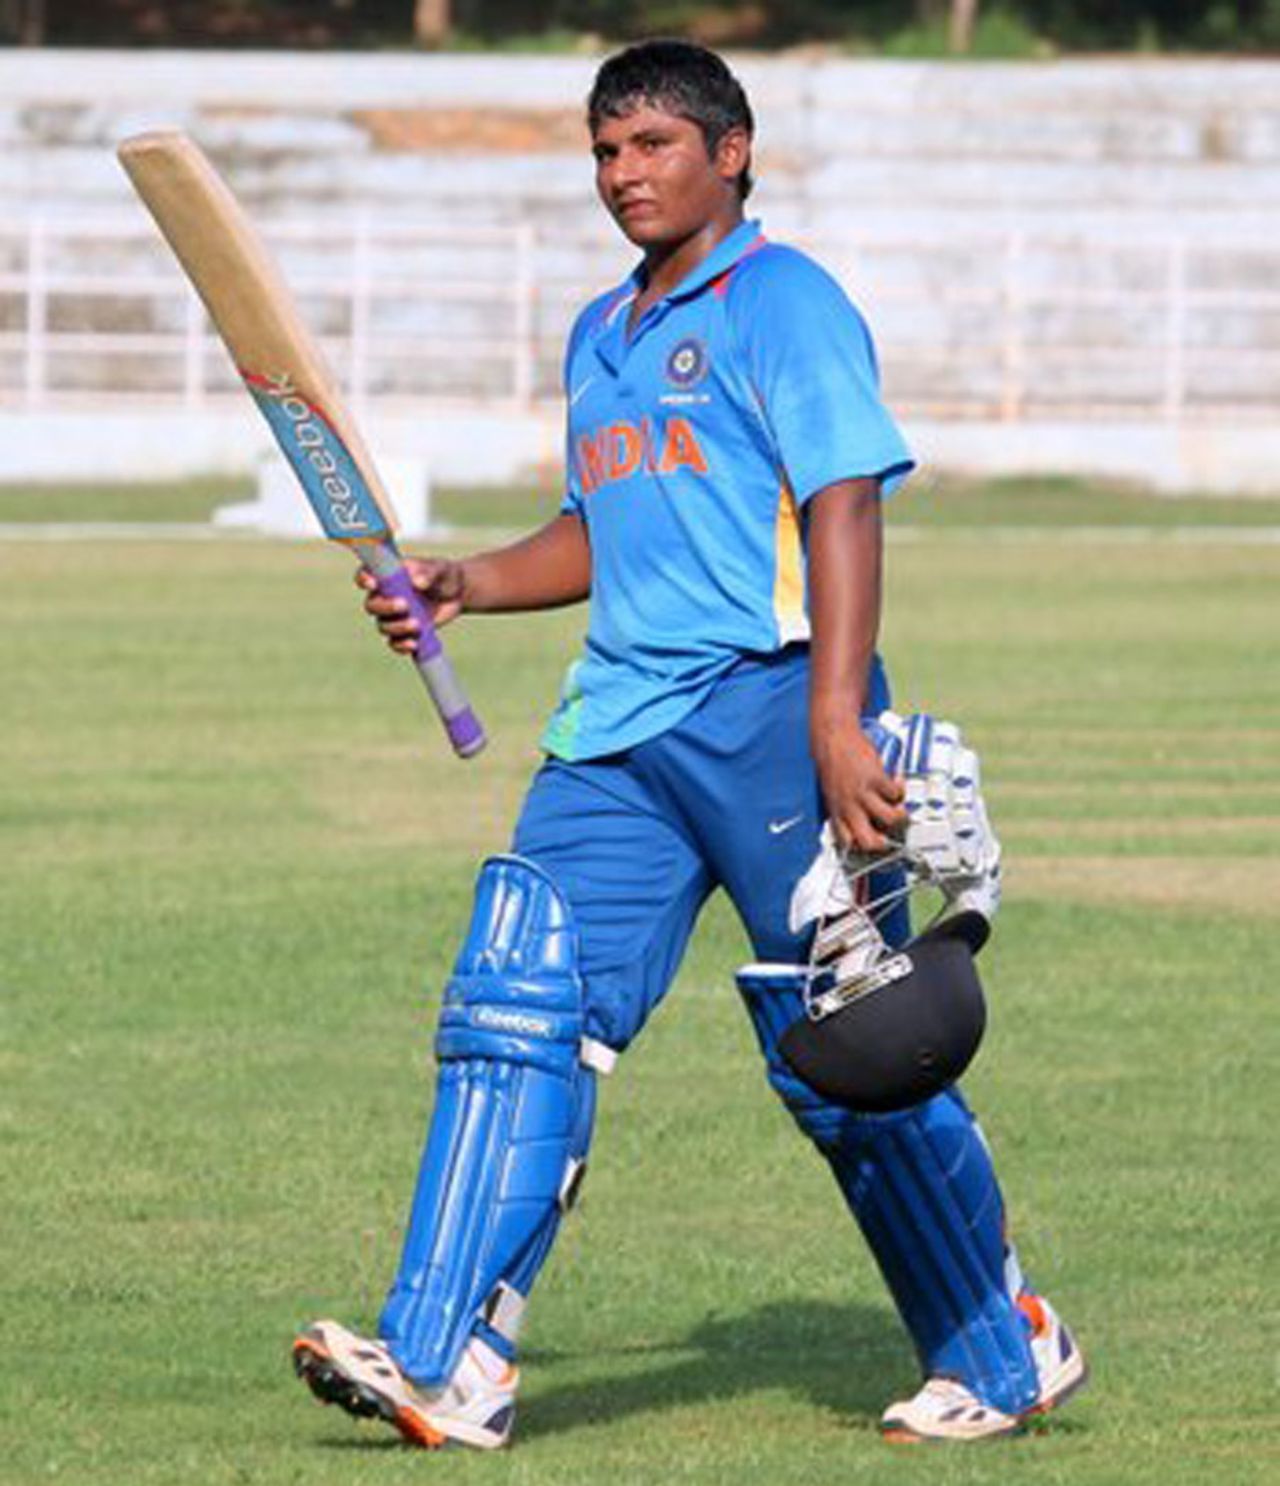 Sarfaraz Khan smashed a 66-ball 101, India Under-19s v South Africa Under-19s, Quadrangular Under-19 Series, Visakhapatnam, Sep 25, 2013